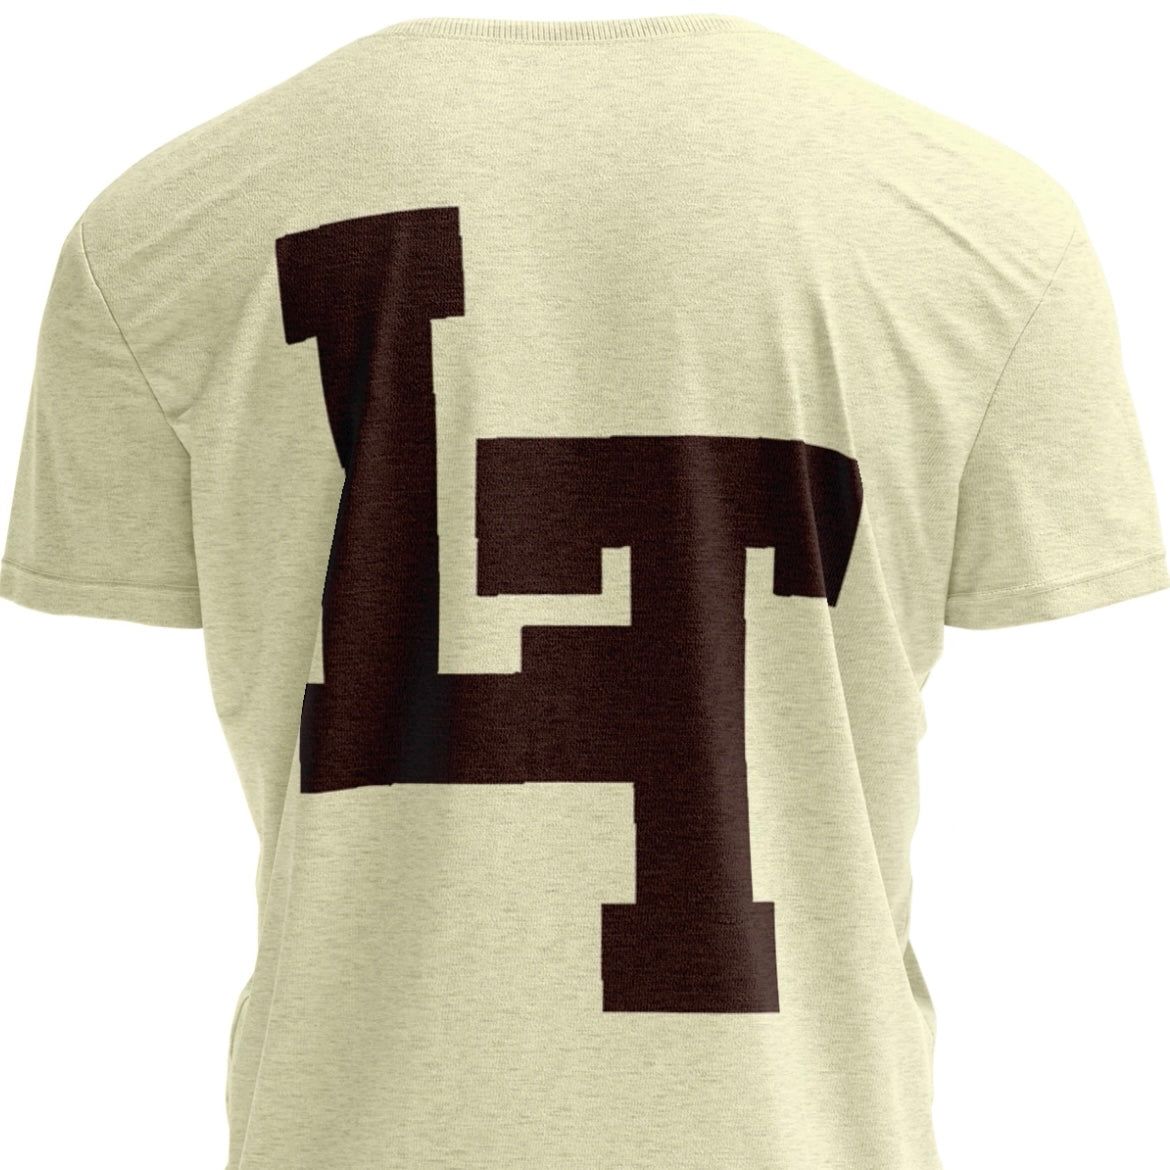 LT Signature Hand T-Shirt (Cream)